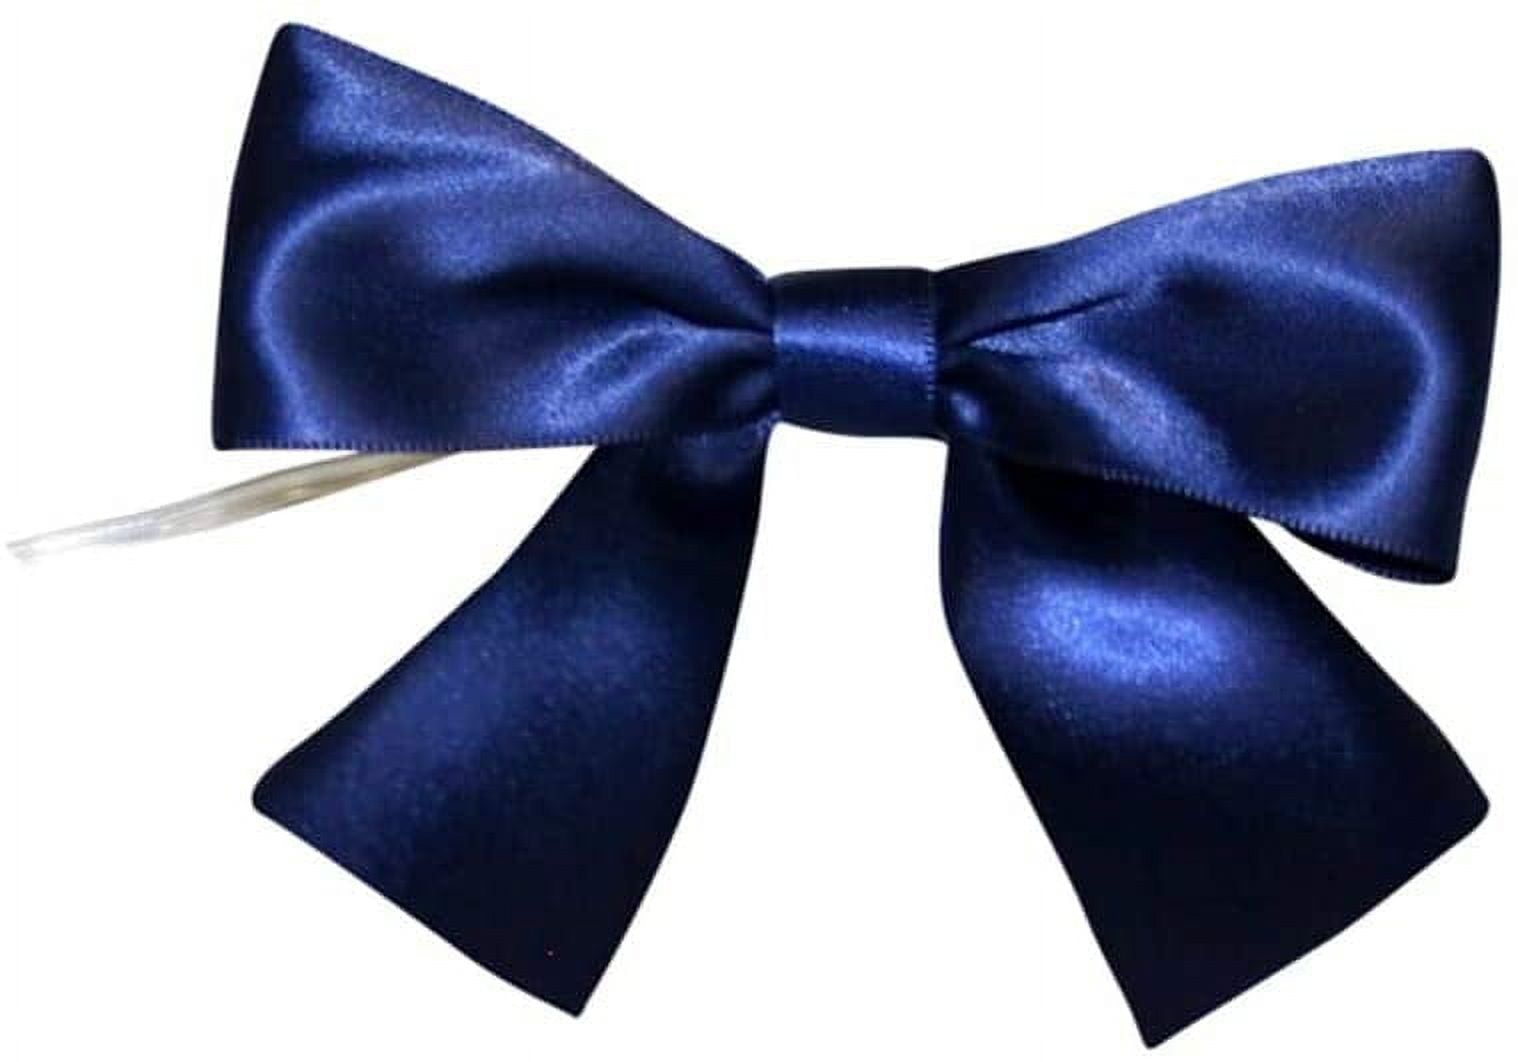 Satin Blue Ribbon 1 inch x 25 Yards, Fabric Royal Blue Ribbon Dark Blue Silk Ribbon for Gift Wrapping, Crafts, Hair Bows Making, Wreaths, Wedding